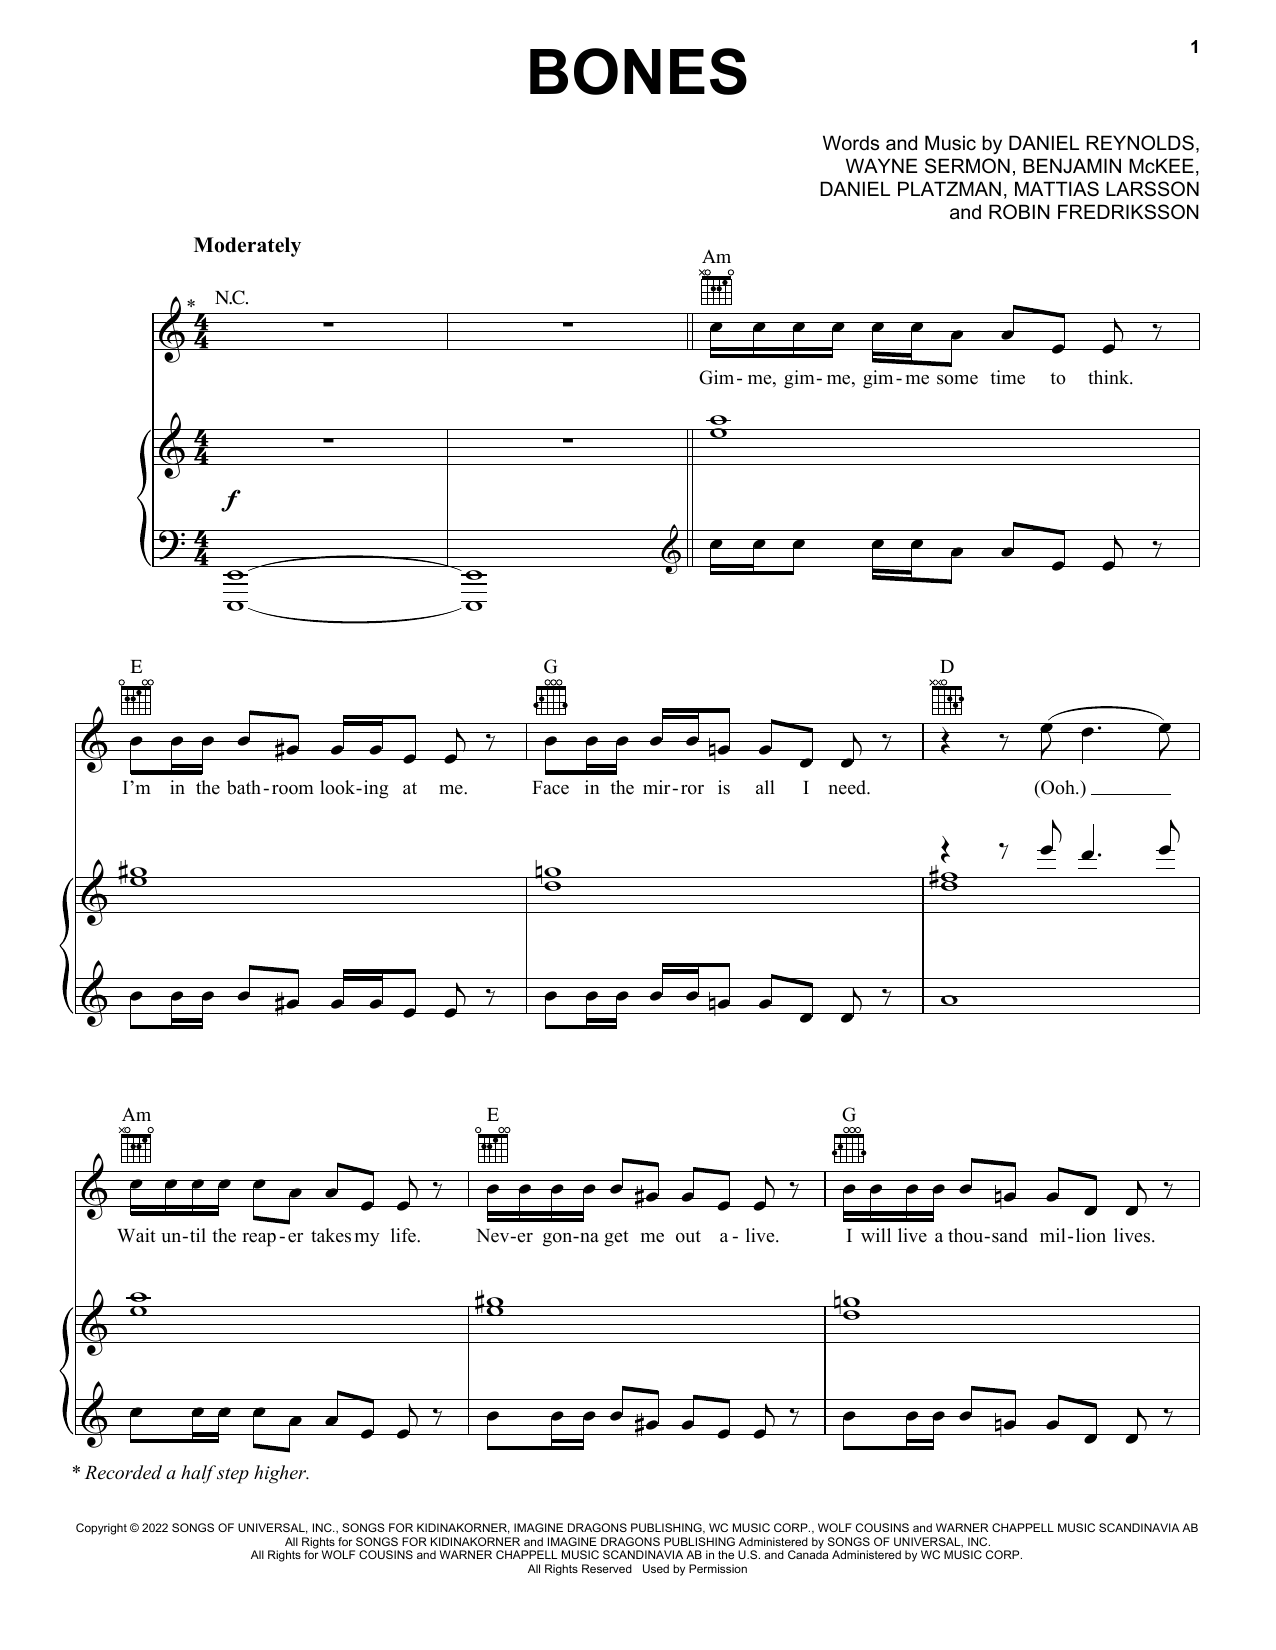 Download Imagine Dragons "Bones" Sheet Music & PDF Chords Piano